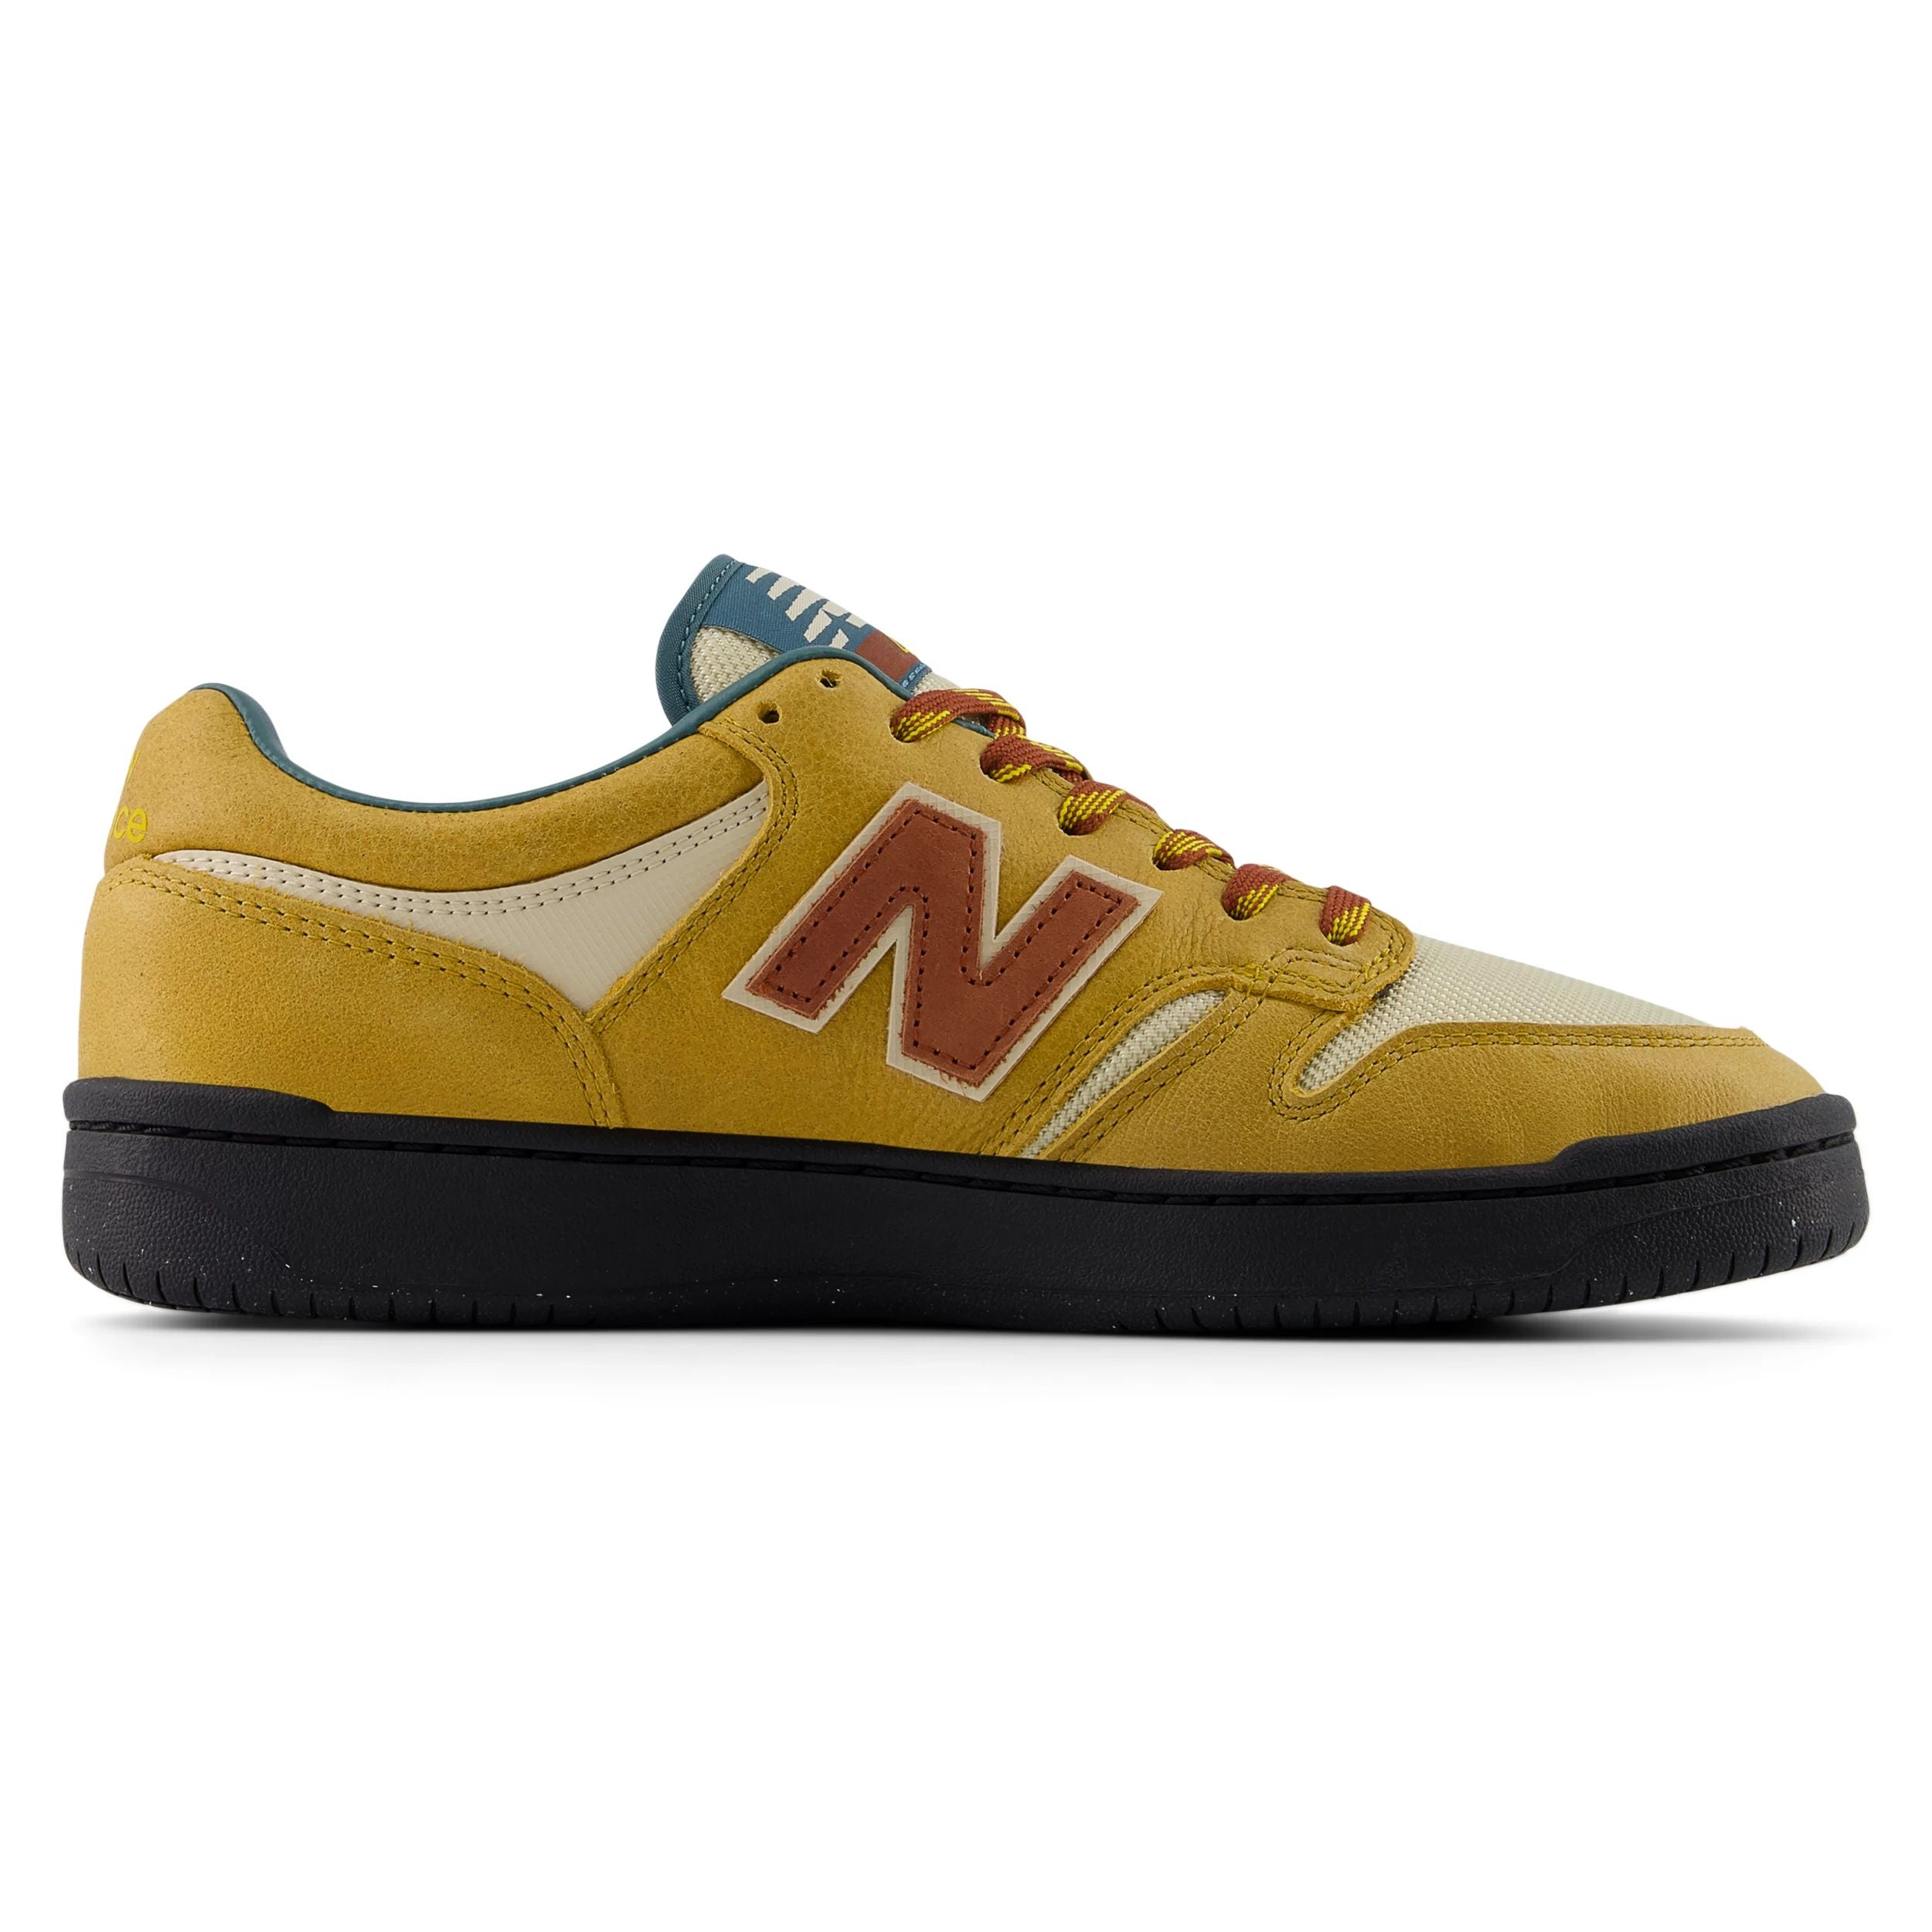 Brown/Green NB Numeric 480 Skate Shoe